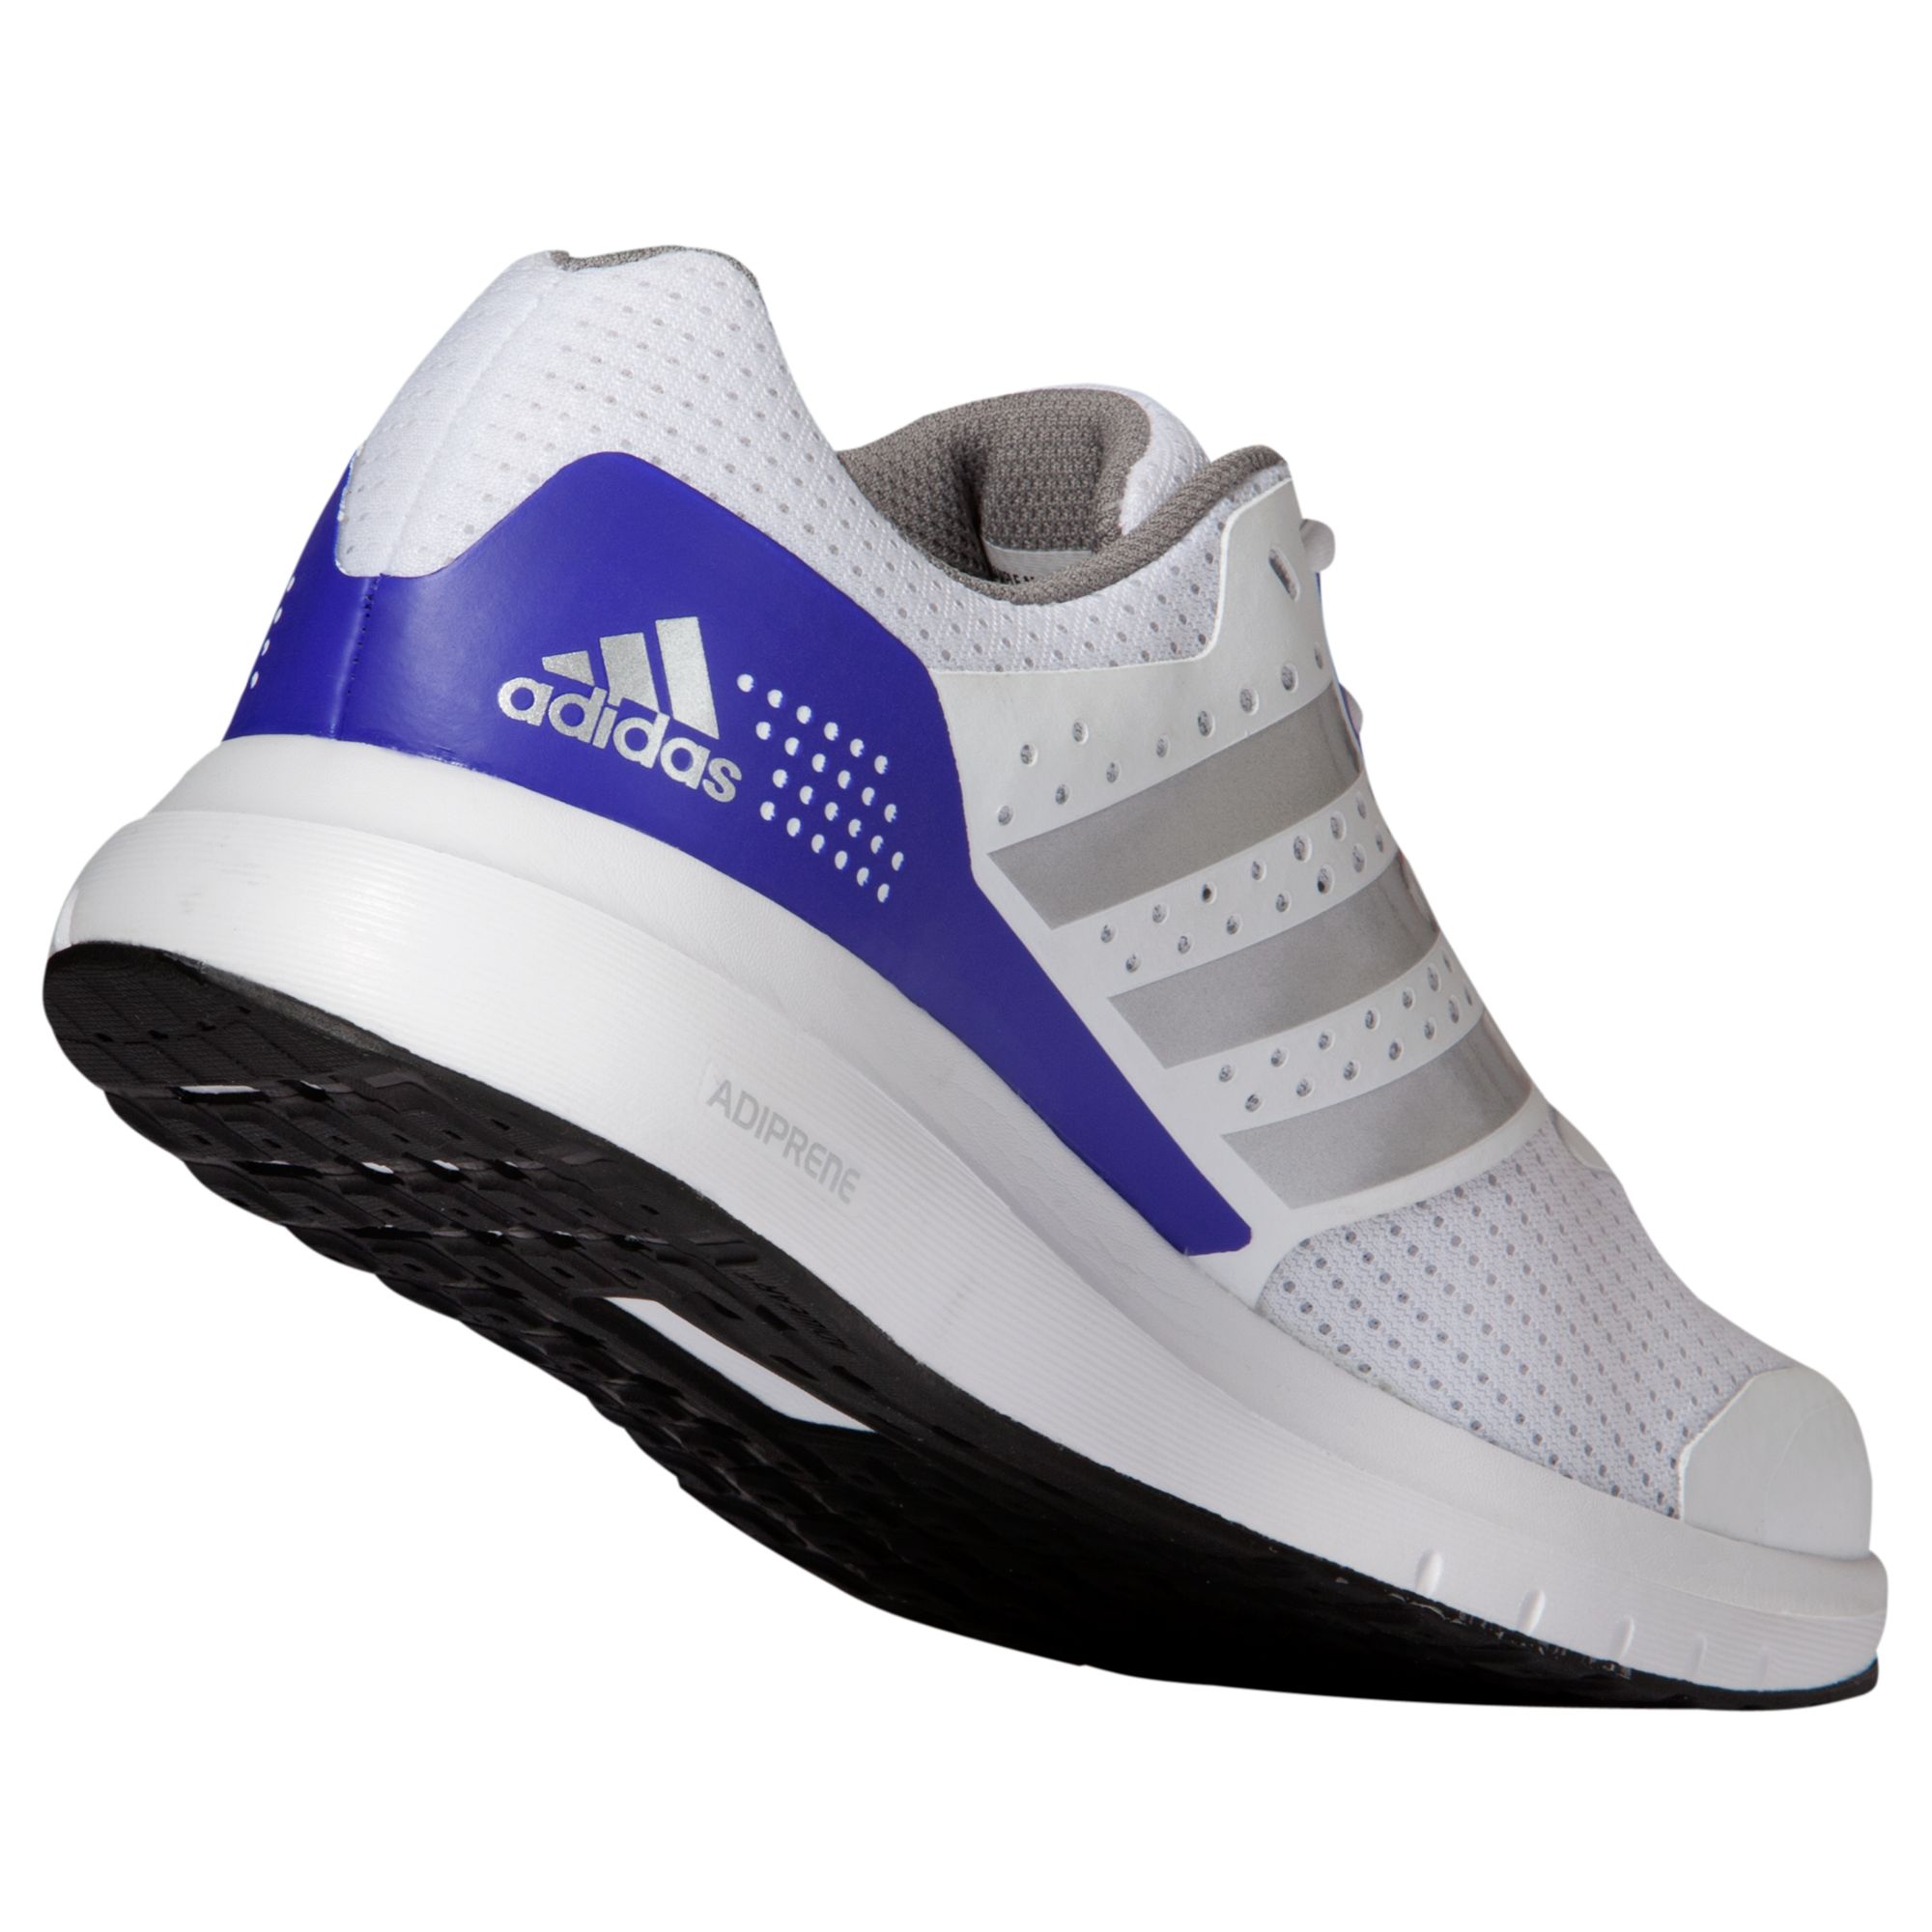 Adidas Duramo 7 Women's Running Shoes, White/Silver at John Lewis \u0026 Partners